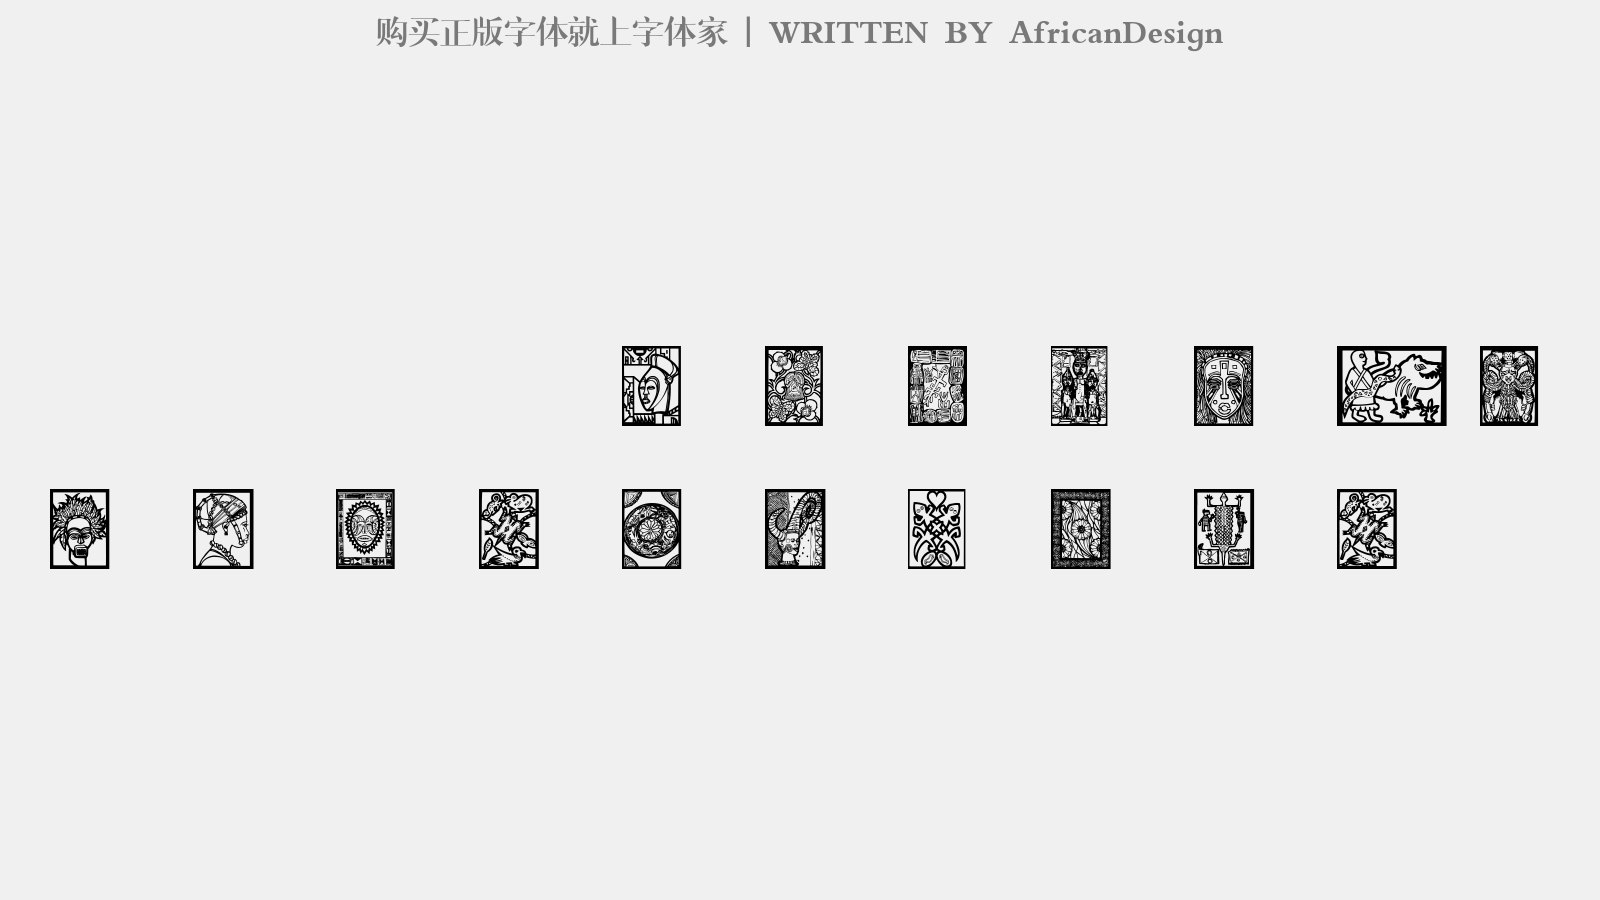 AfricanDesign - 大写字母/小写字母/数字